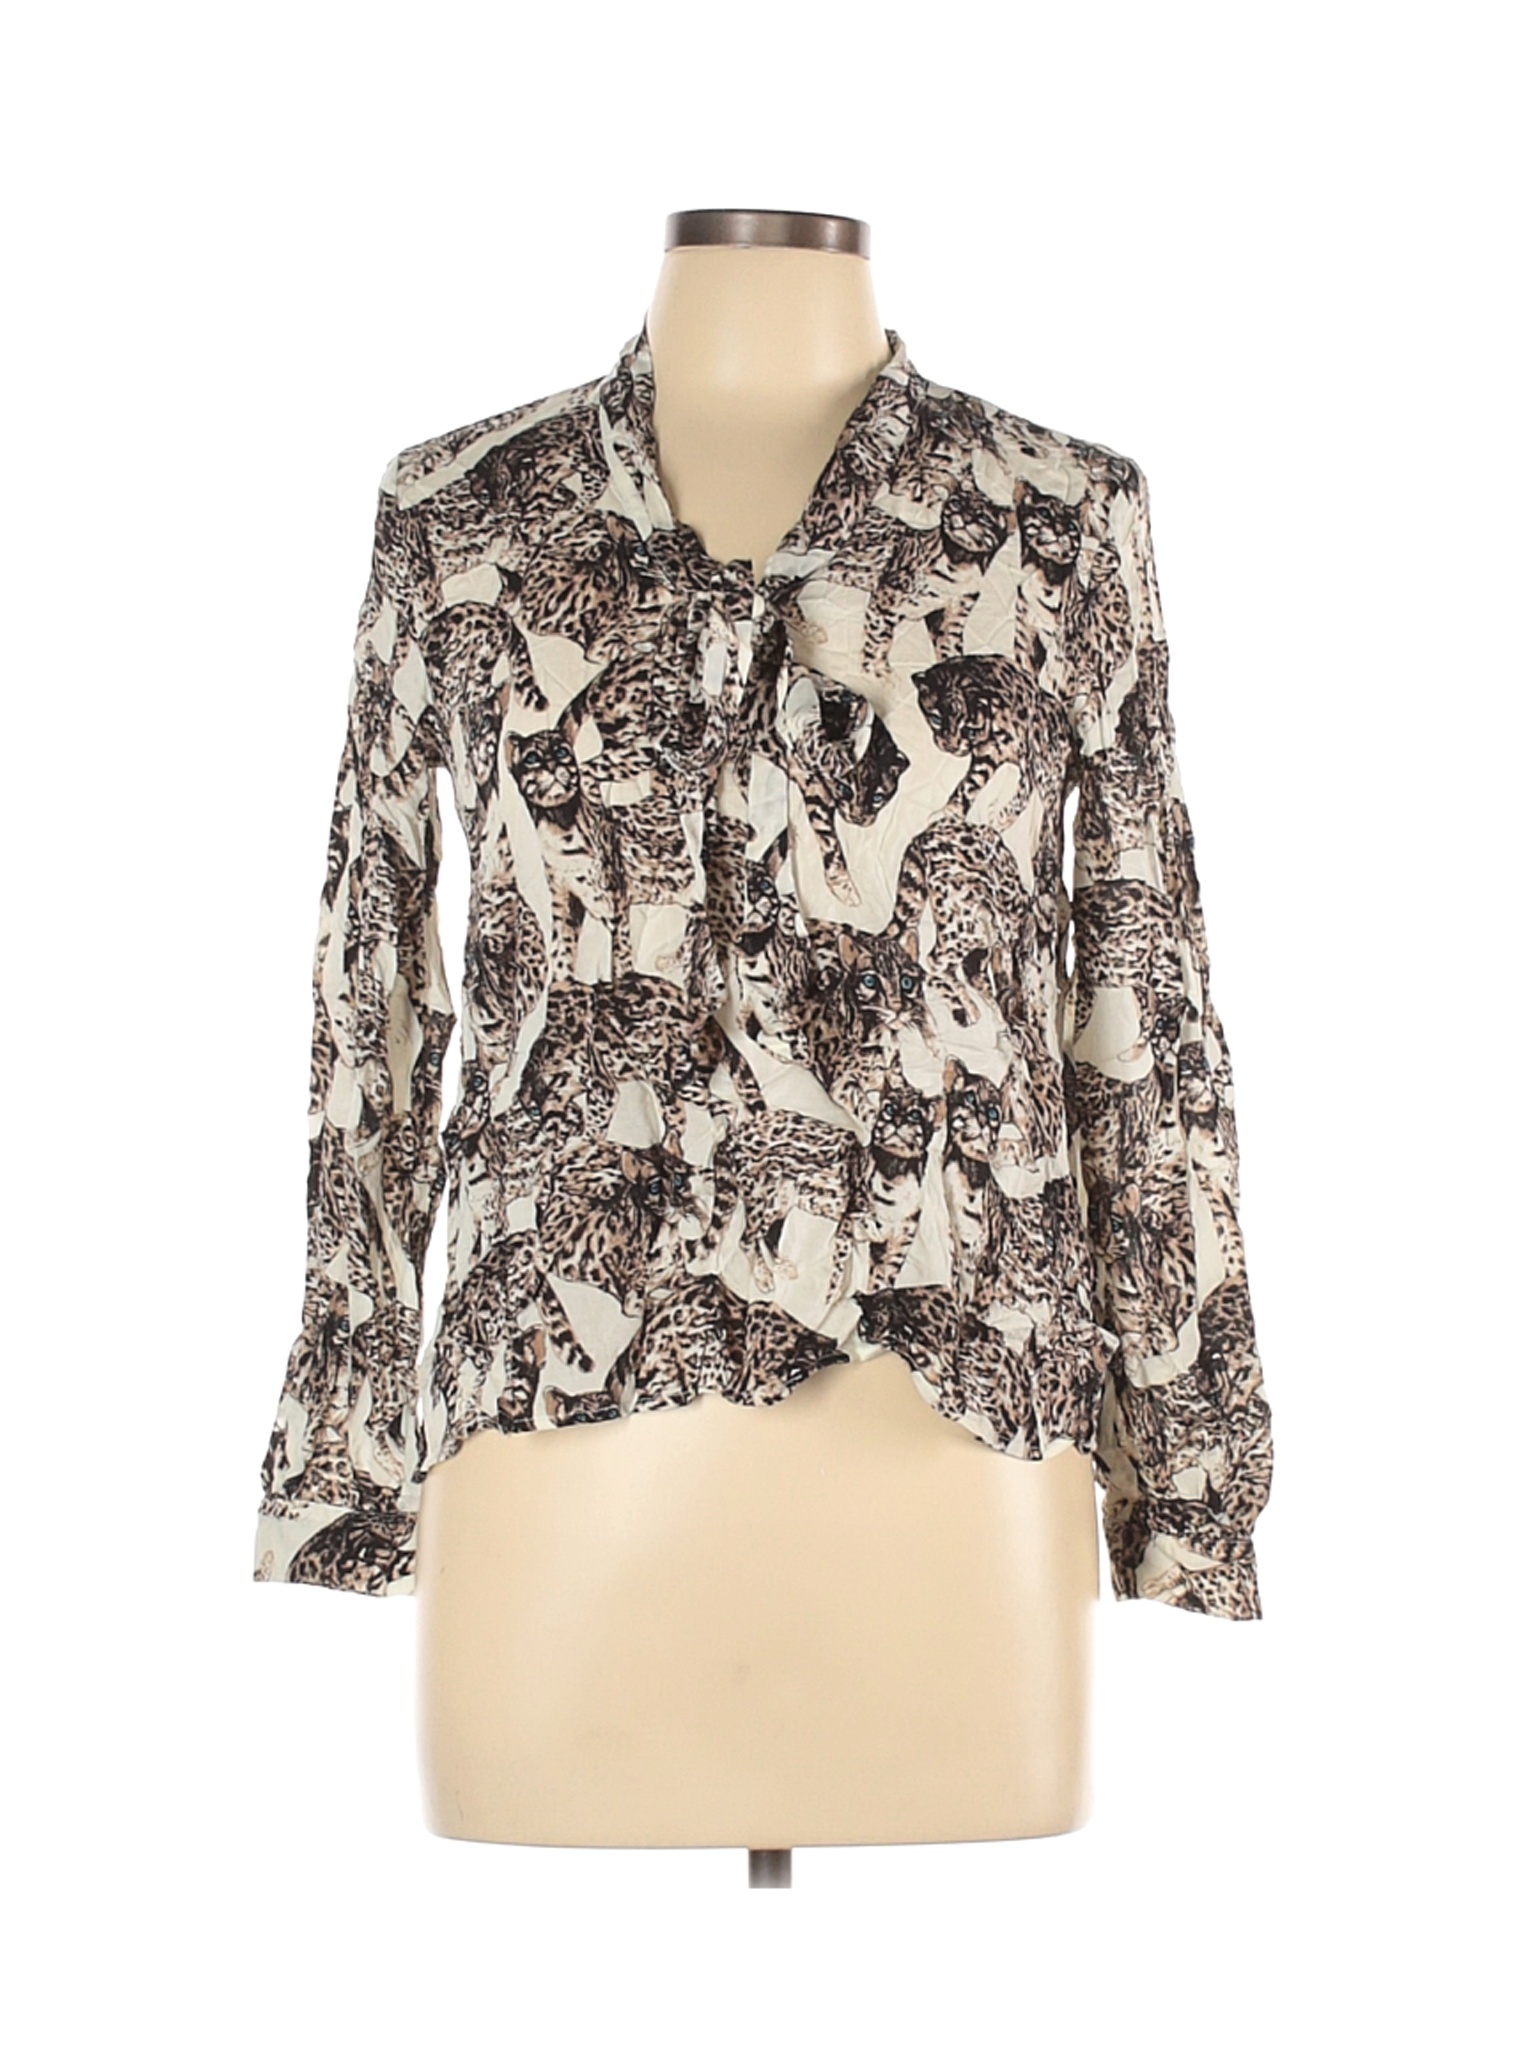 H&M Women Ivory Long Sleeve Blouse 6 | eBay